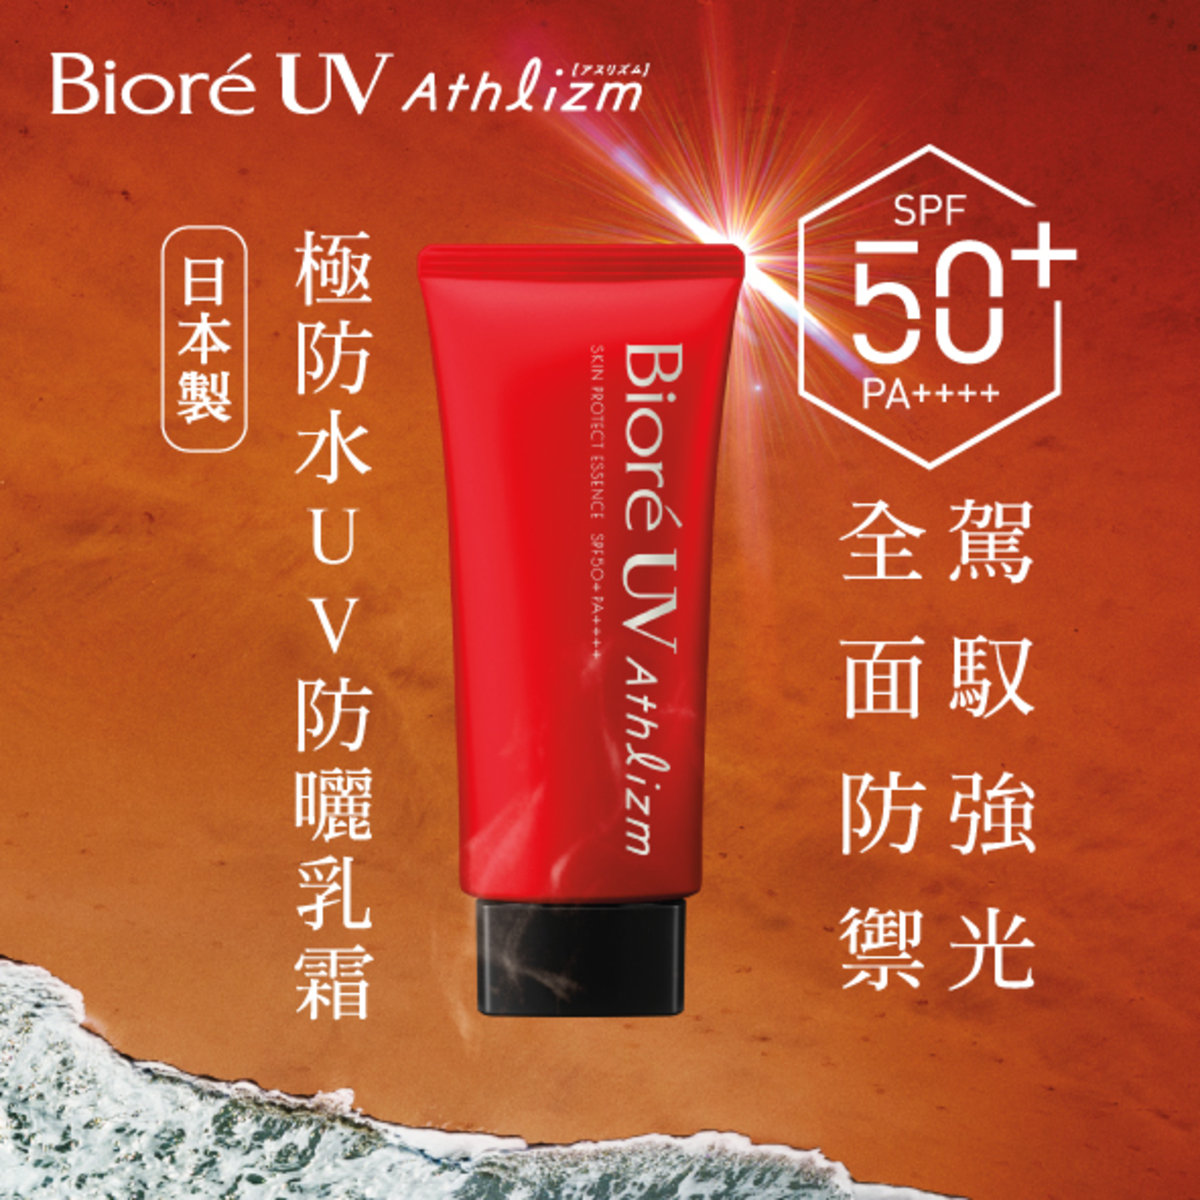 Bioré UV Athlizm – 碧柔極防水UV防曬乳霜 SPF50+ PA++++ (新舊包裝隨機發送) 